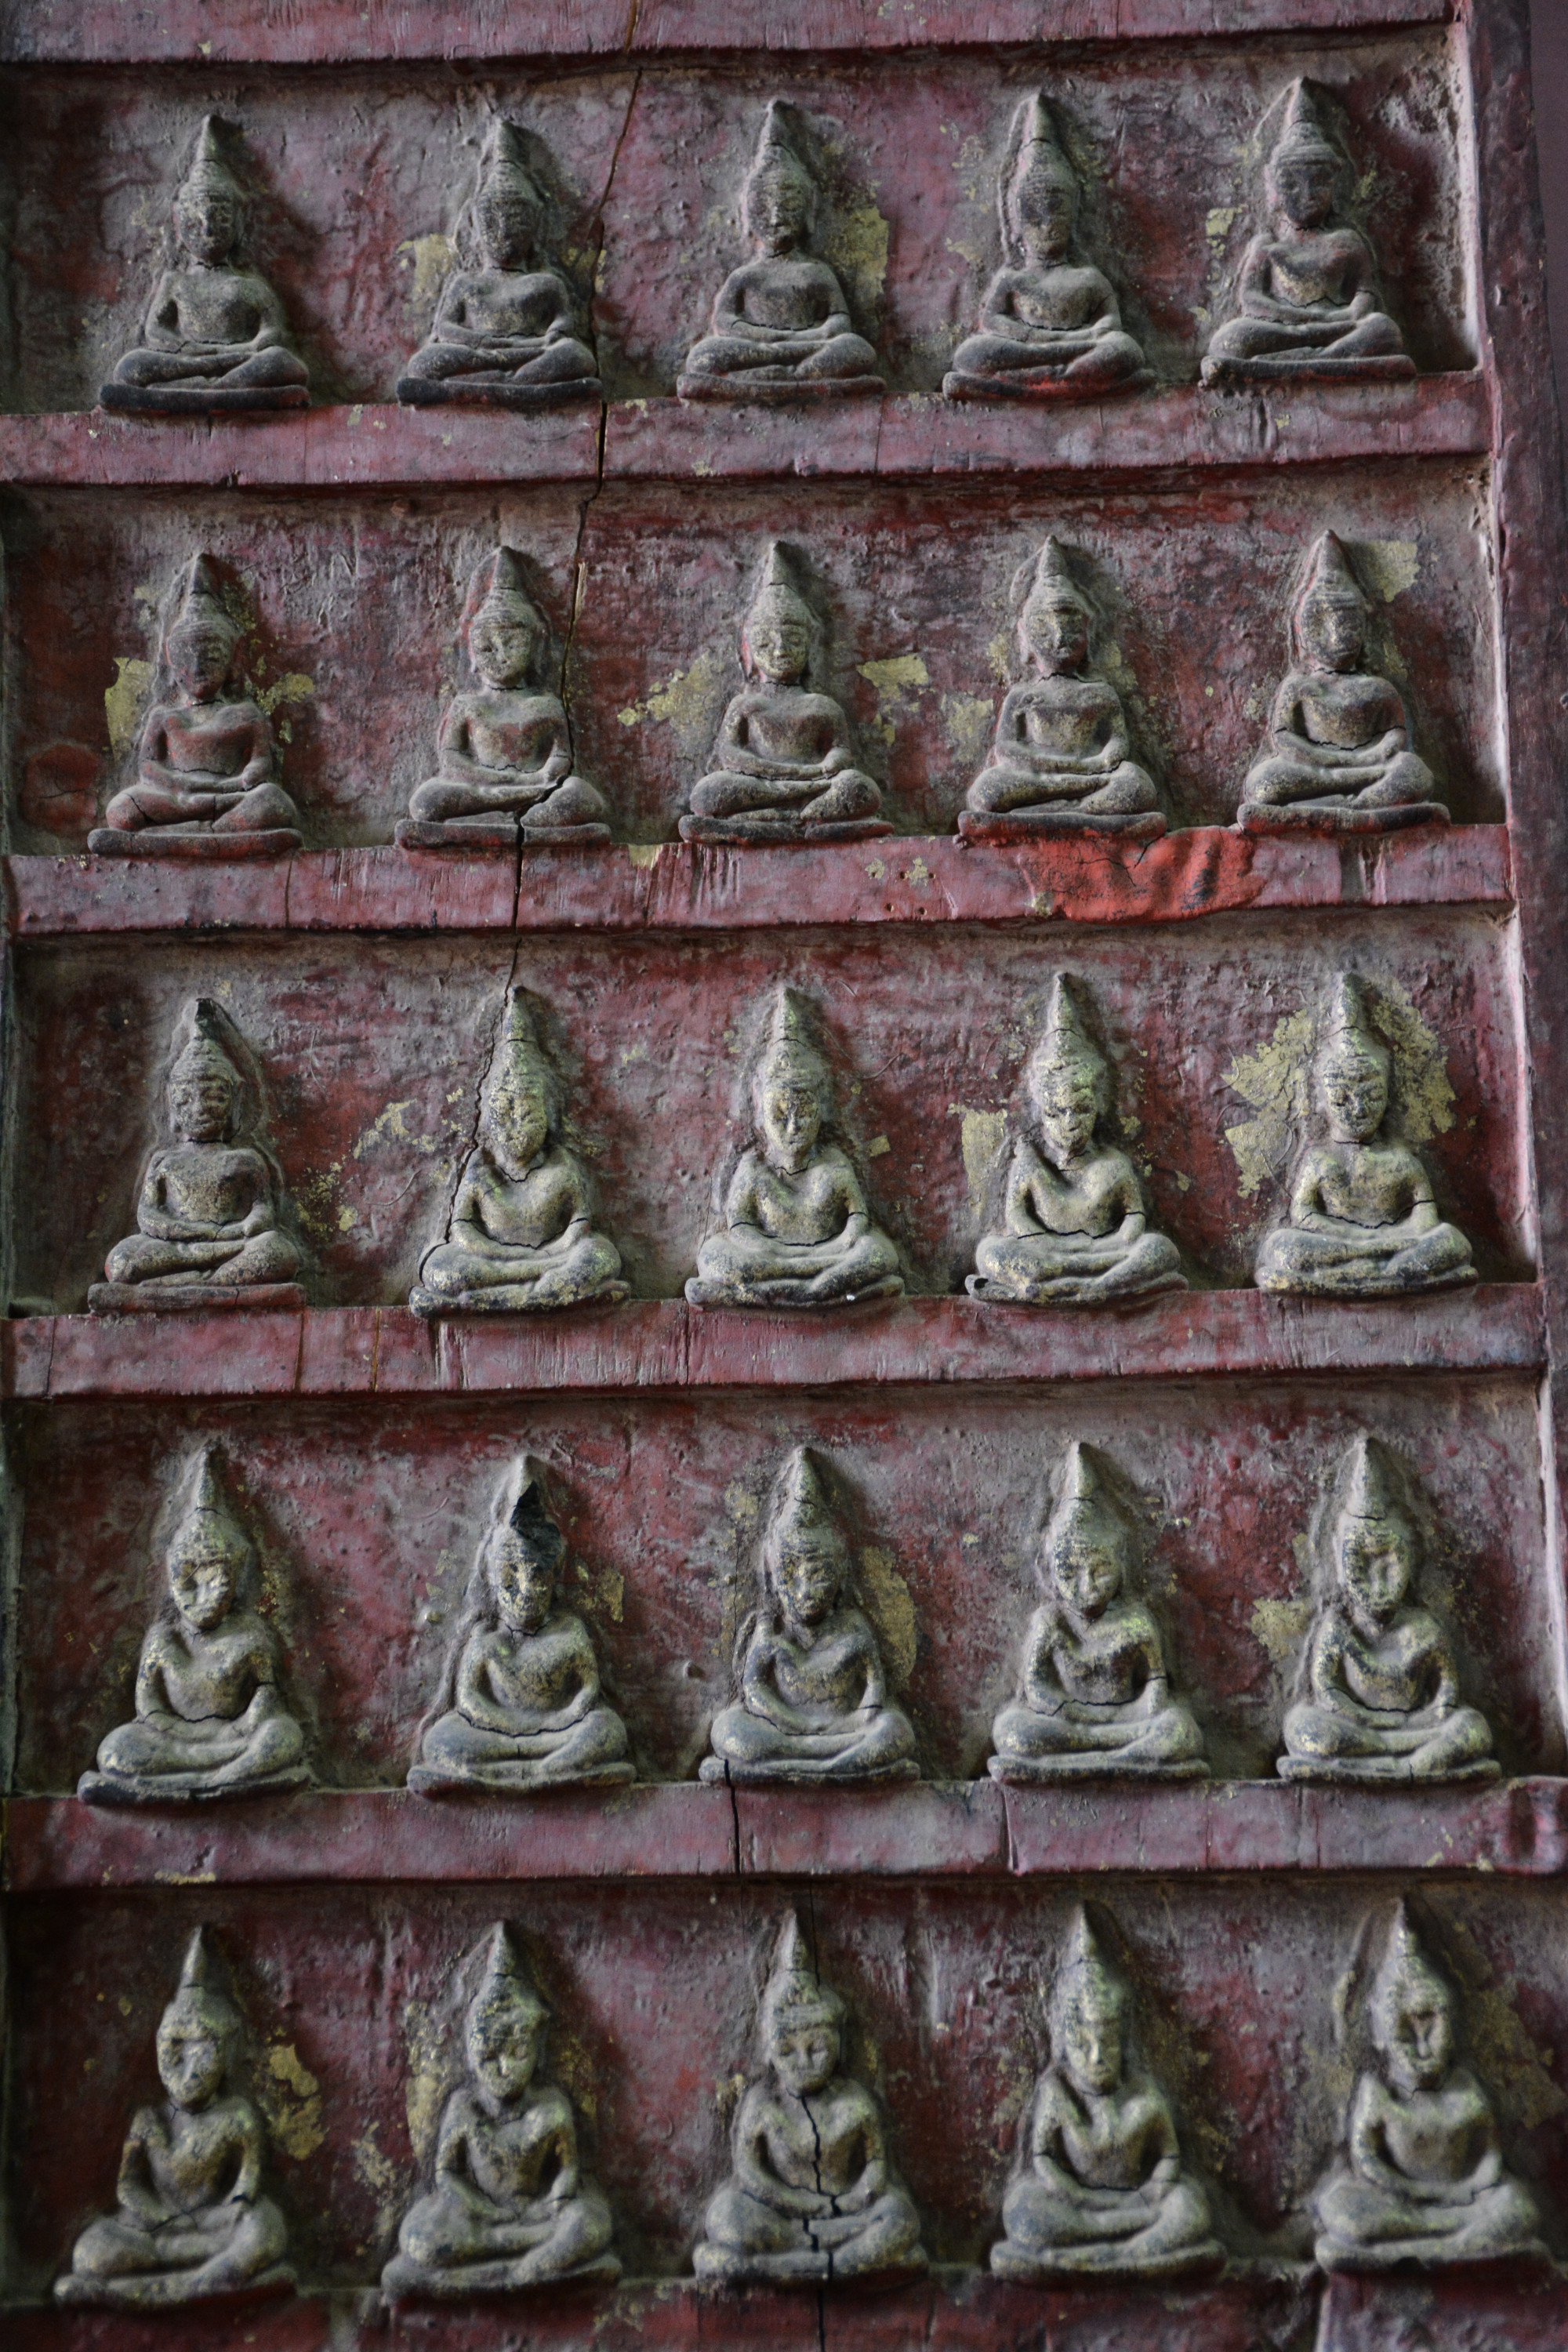 Mini Buddha figures